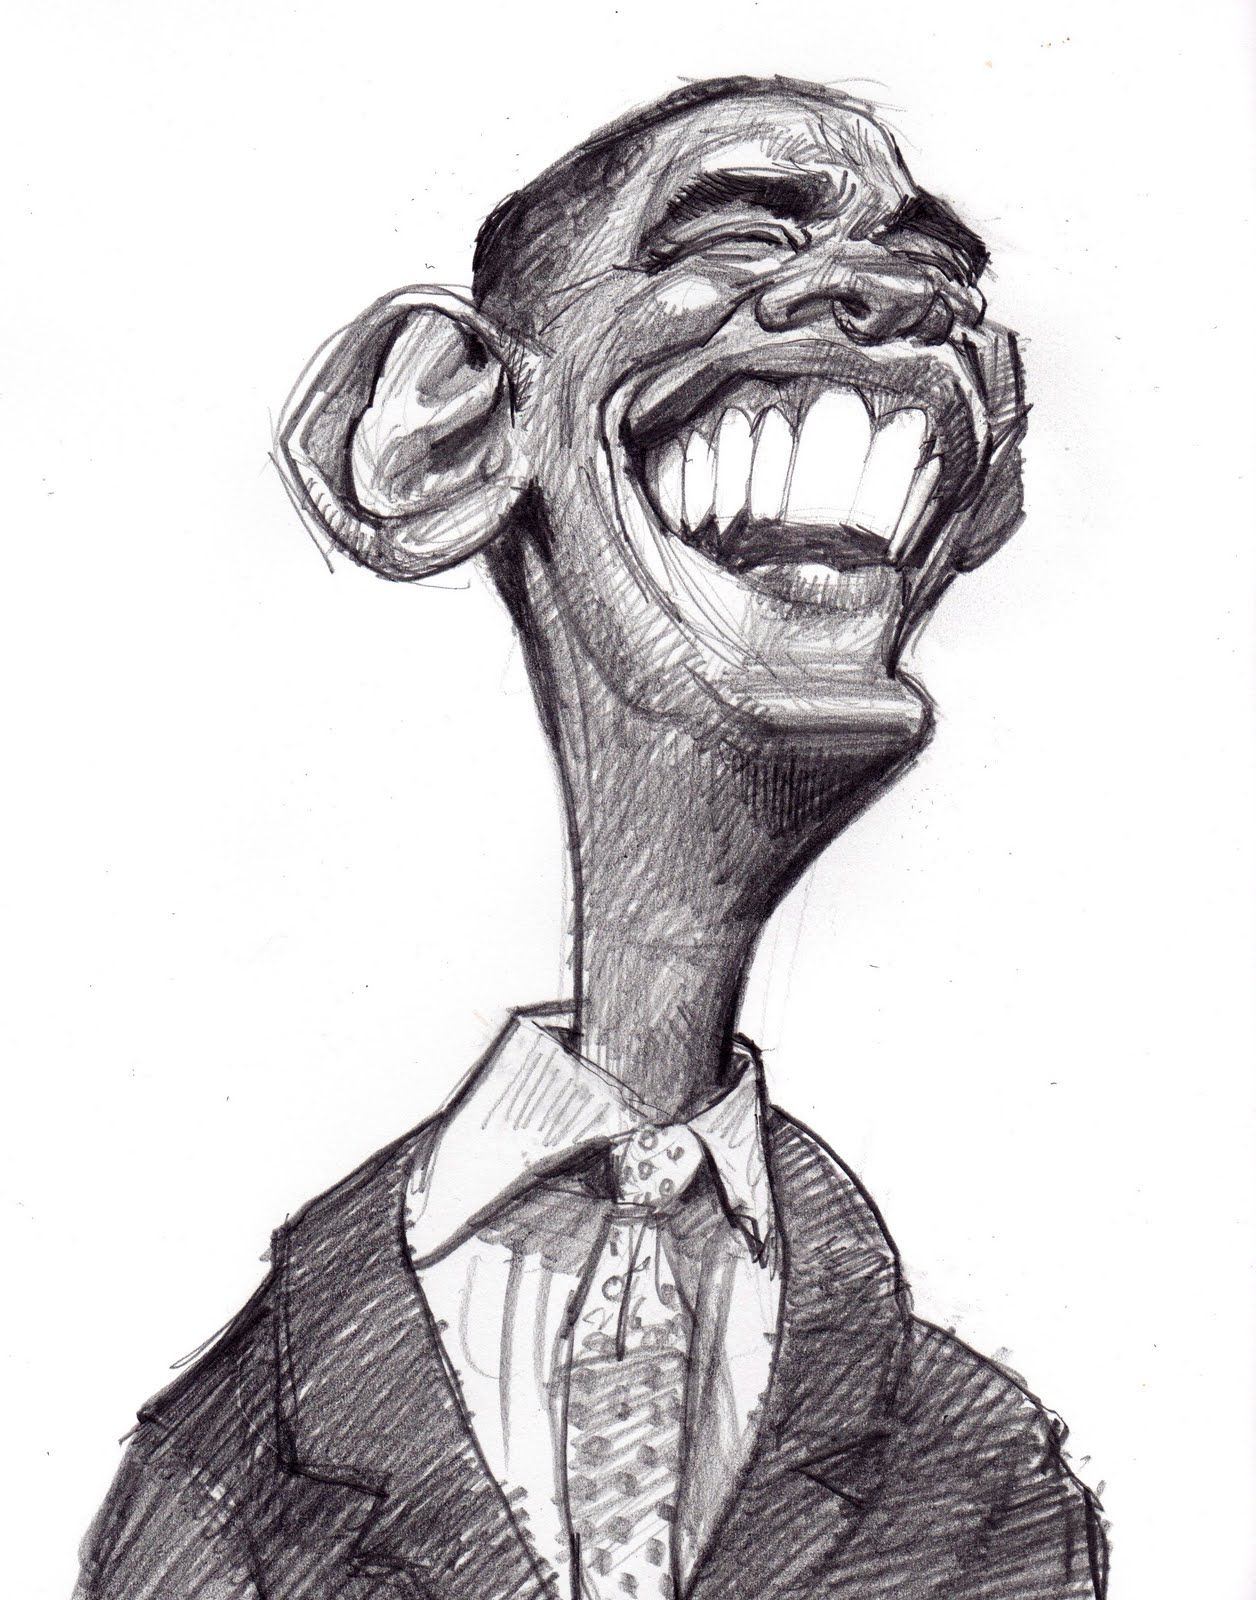 Сатирический образ рисунок 6 класс. Сатирический портрет Обама. Сатирический портрет Артура пирожкова. Сатирический портрет Милохина. Сатирические образы человека.